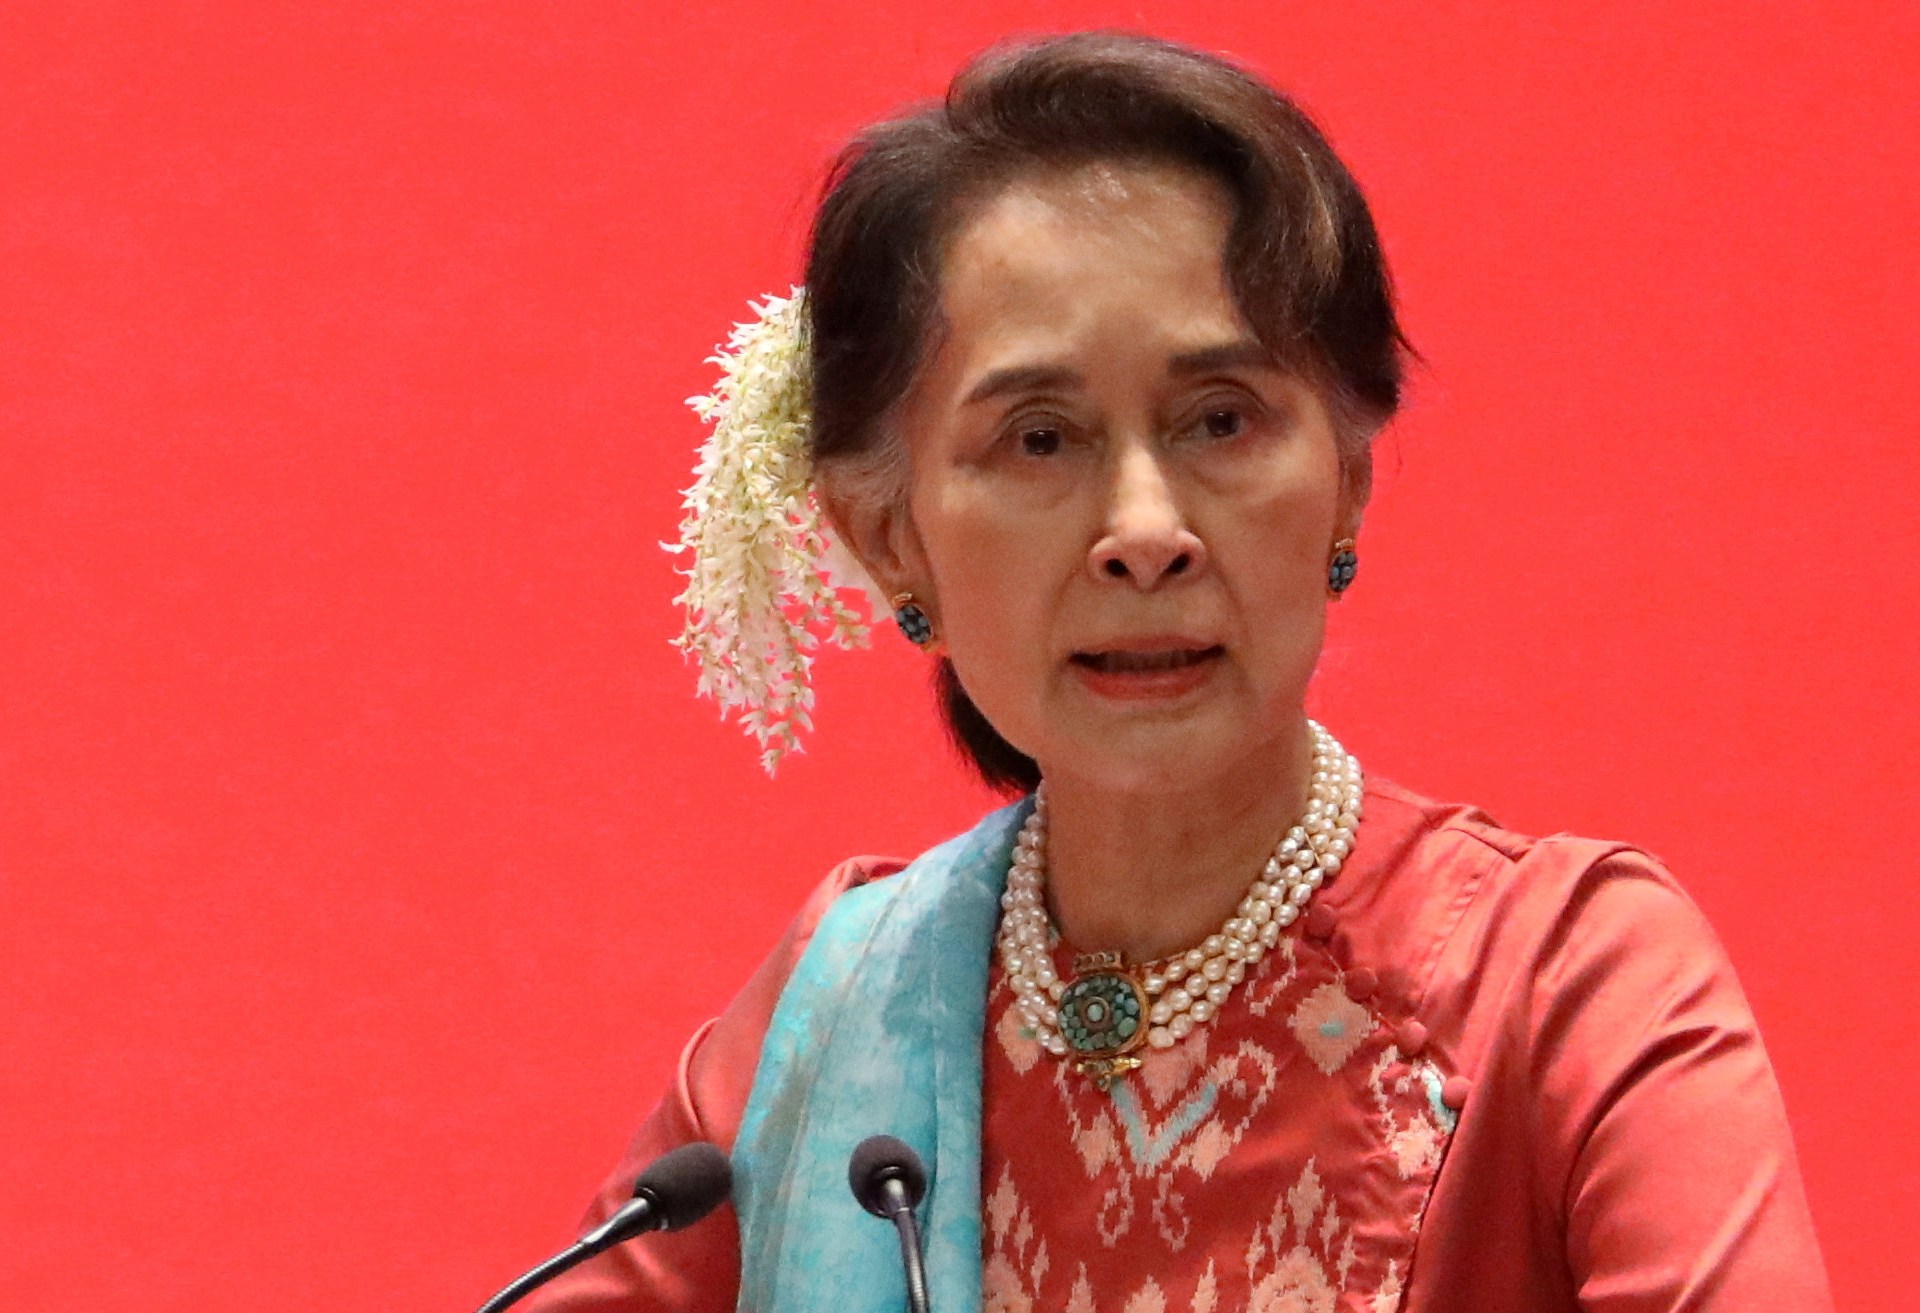 Aung San Suu Kyi, adviser jailed in Myanmar over state secrets